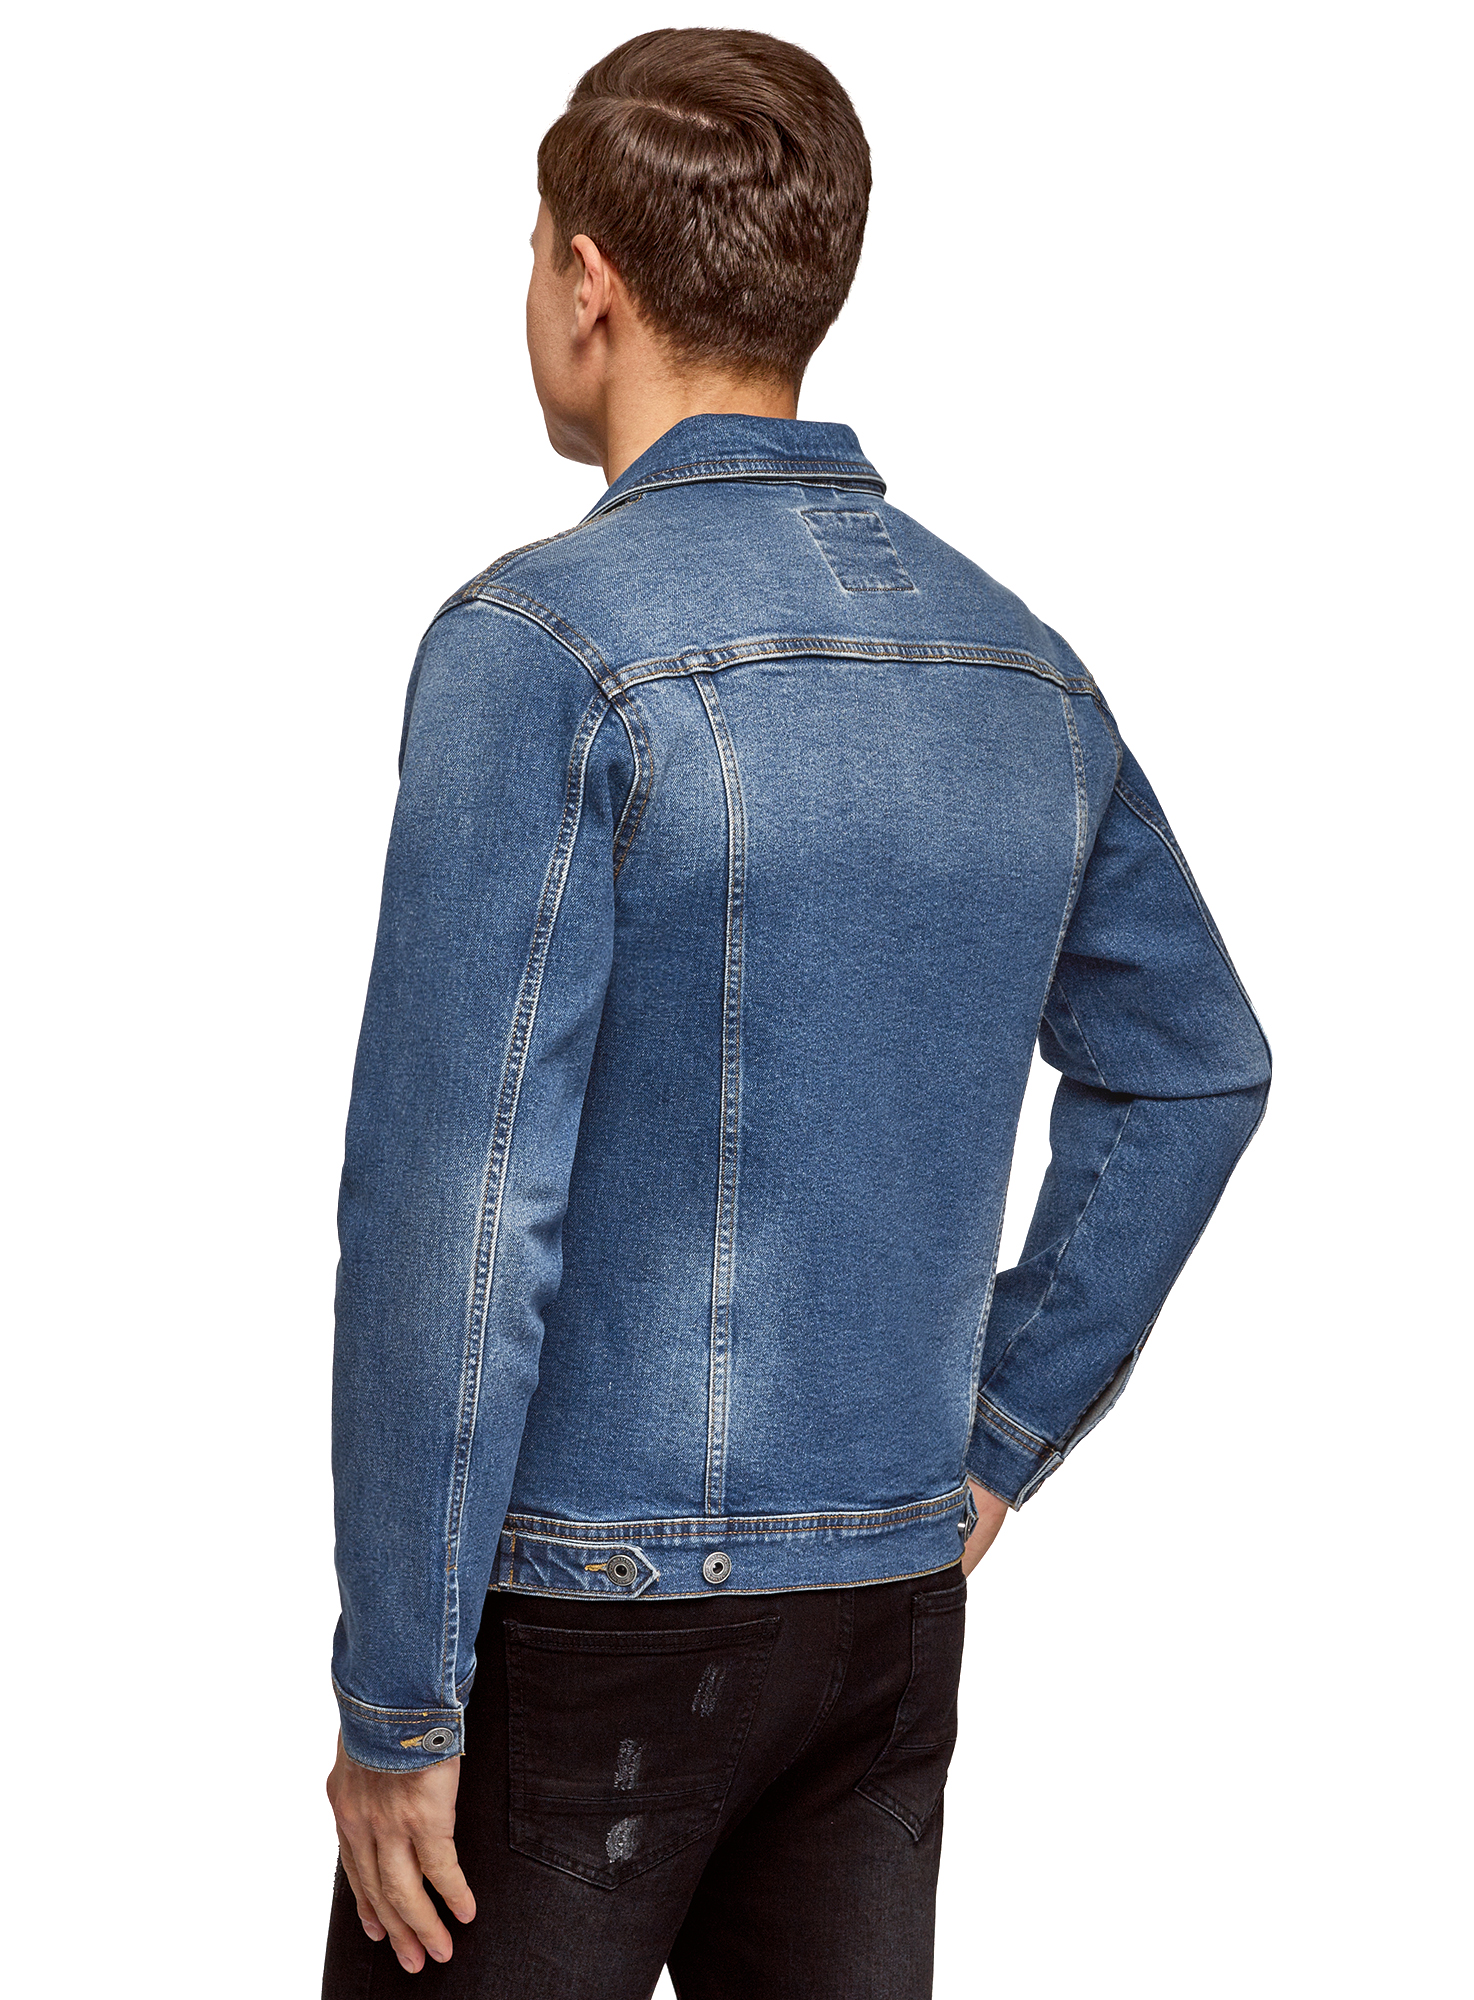 Джинсовая куртка мужская oodji 6L300010M синяя XL